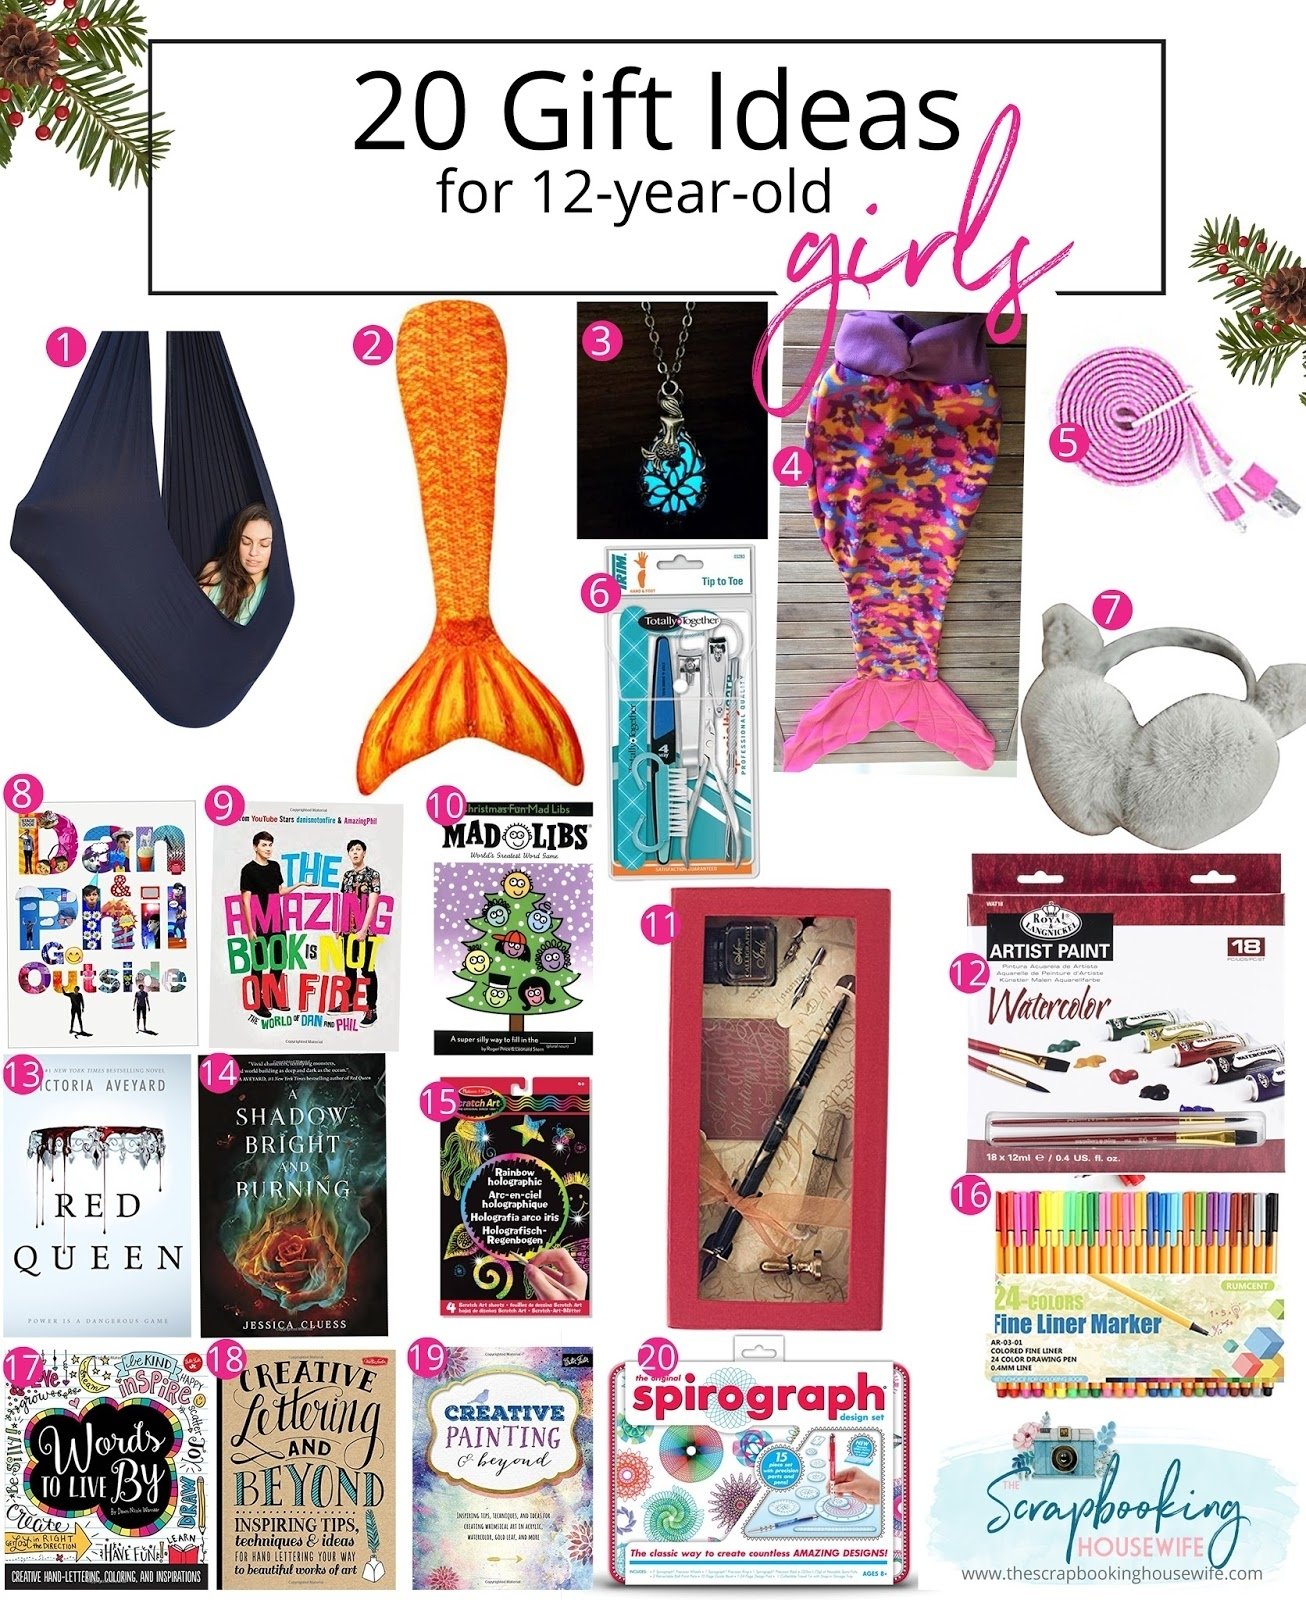 10 Most Popular Gift Ideas For Tween Girls ellabella designs 20 gift ideas for 12 year old tween girls 17 2022